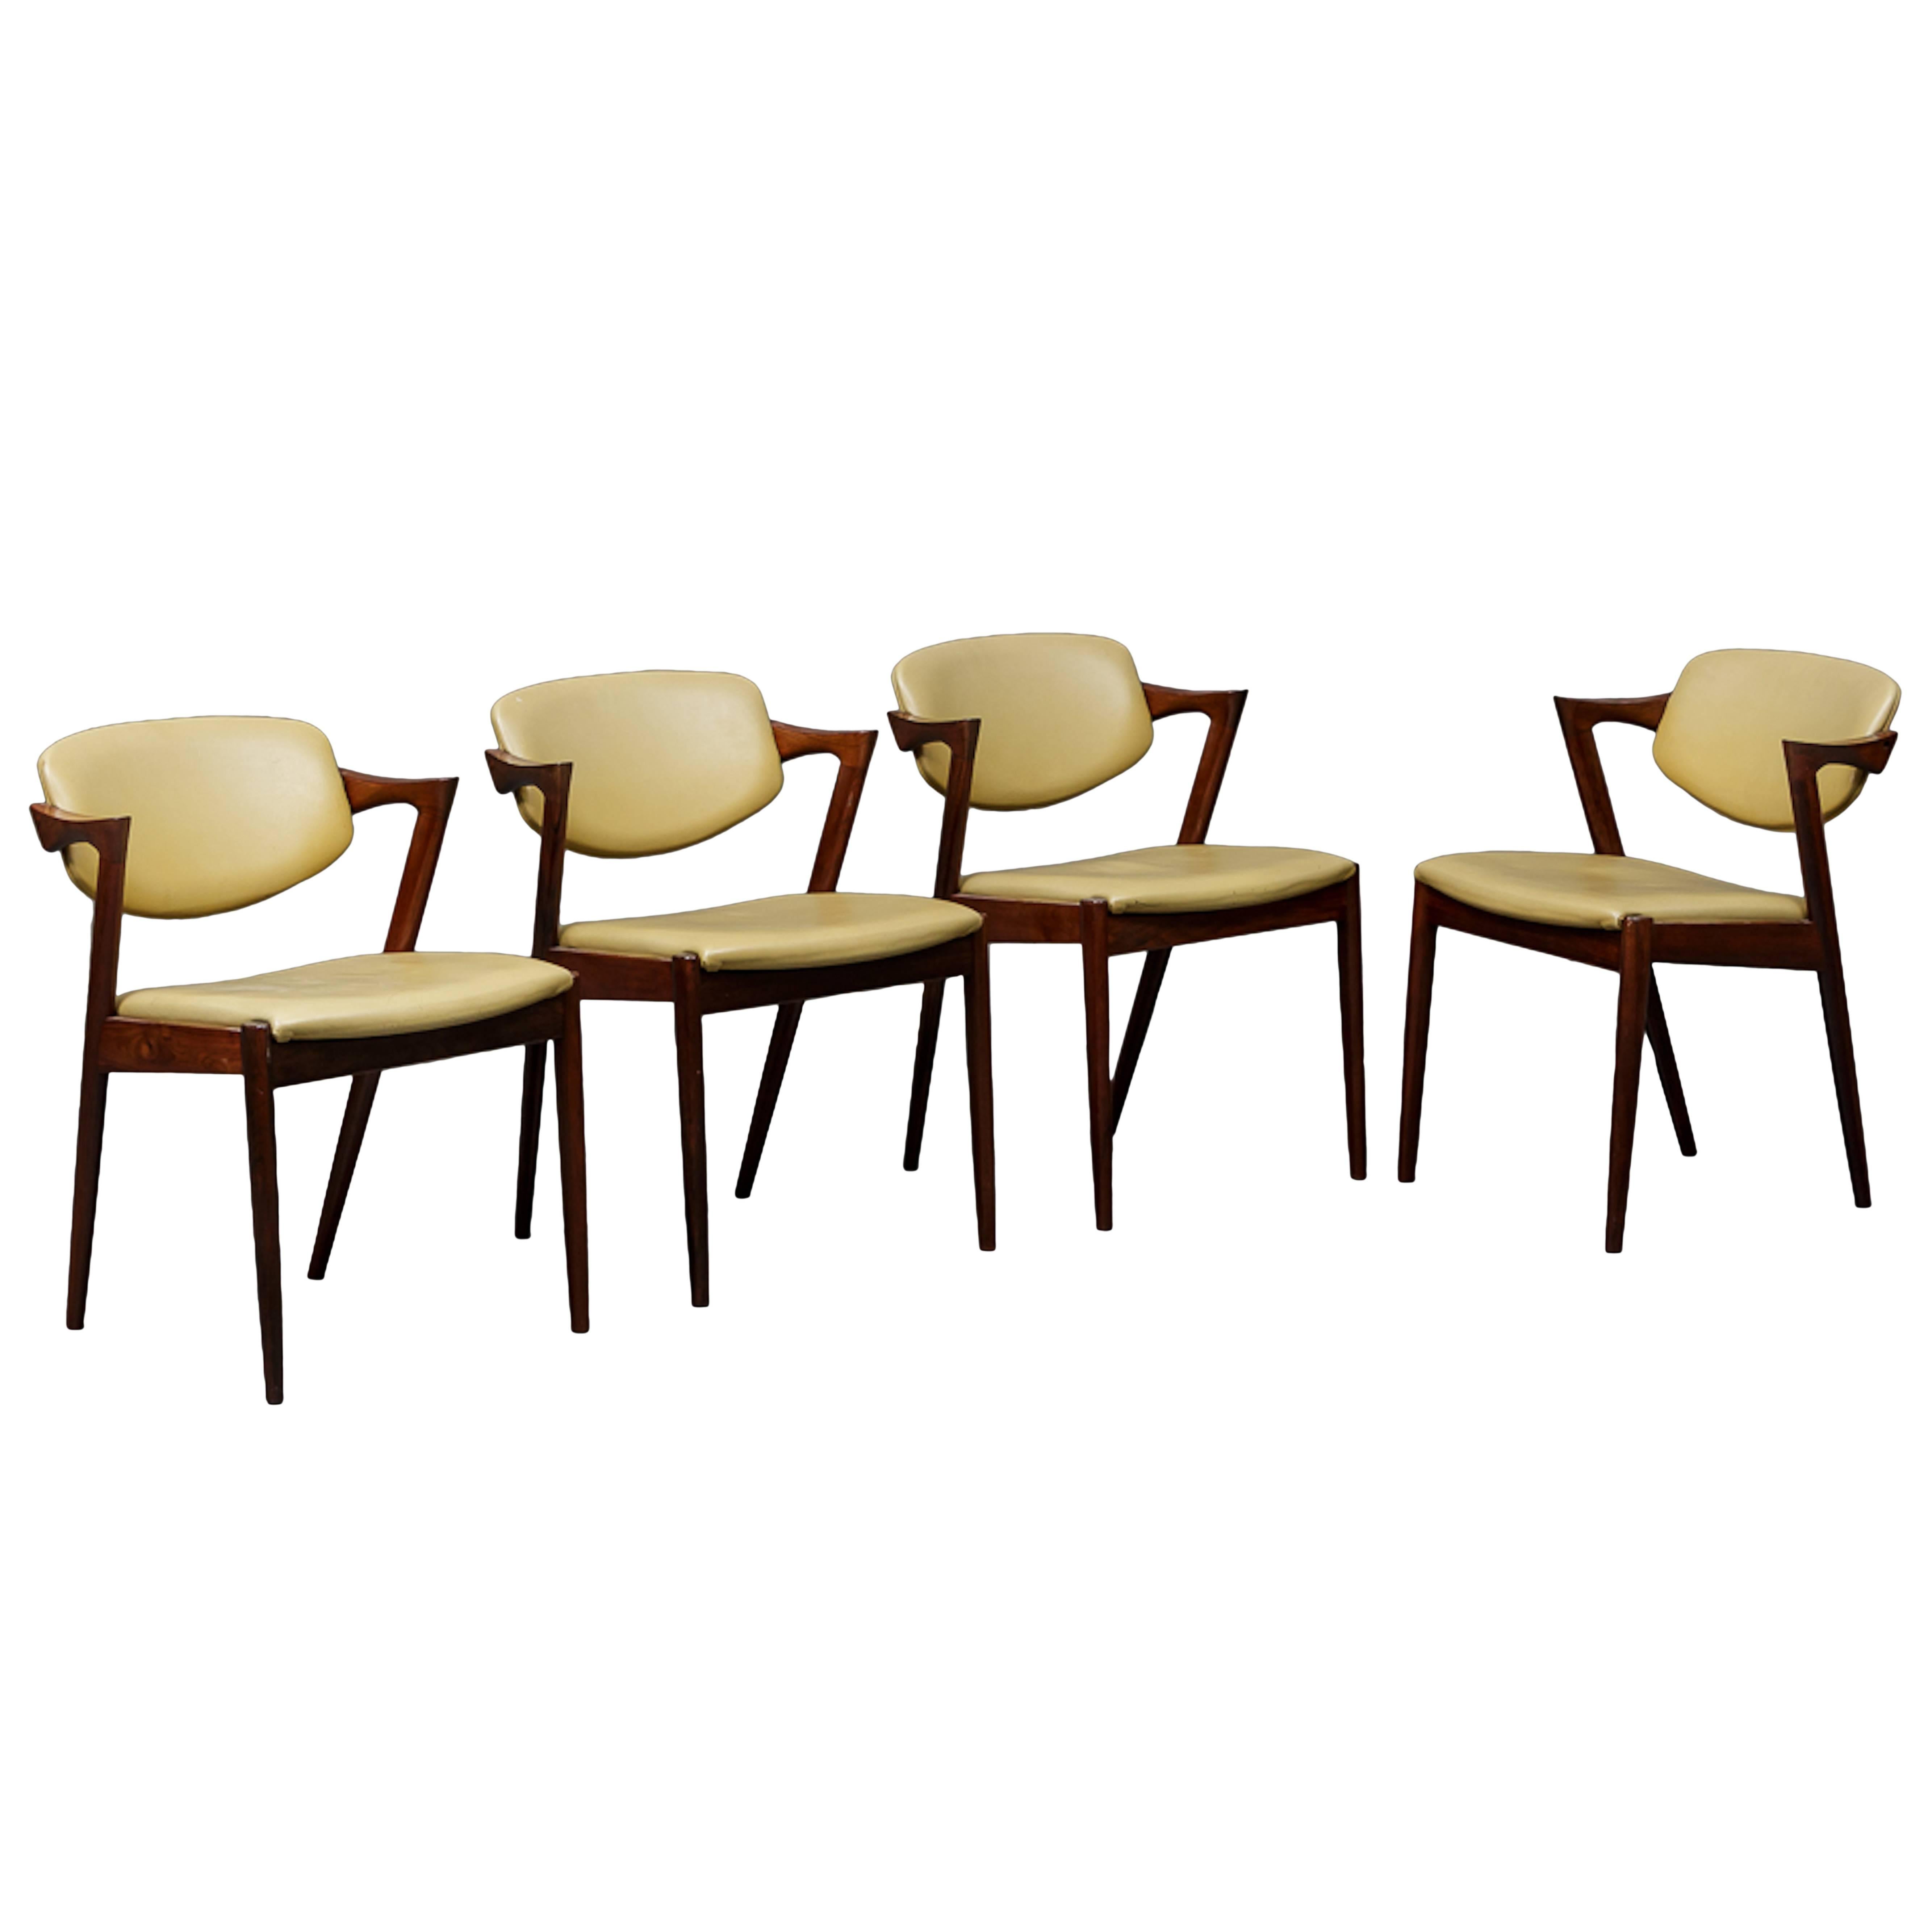 Four Kai Kristiansen Rosewood Dining Chairs